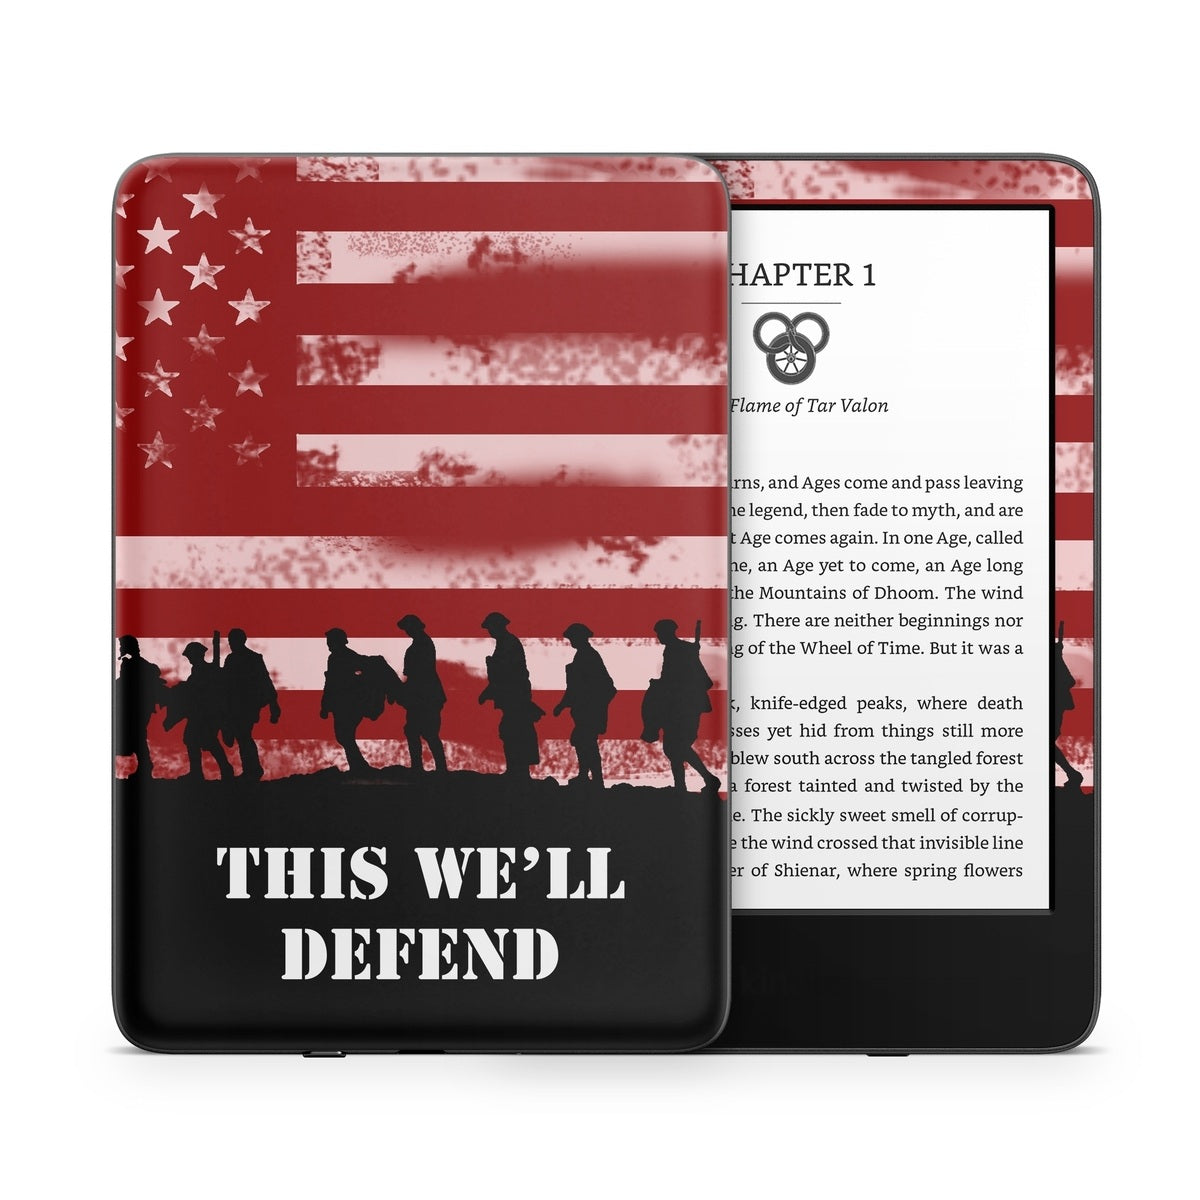 Defend - Amazon Kindle Skin